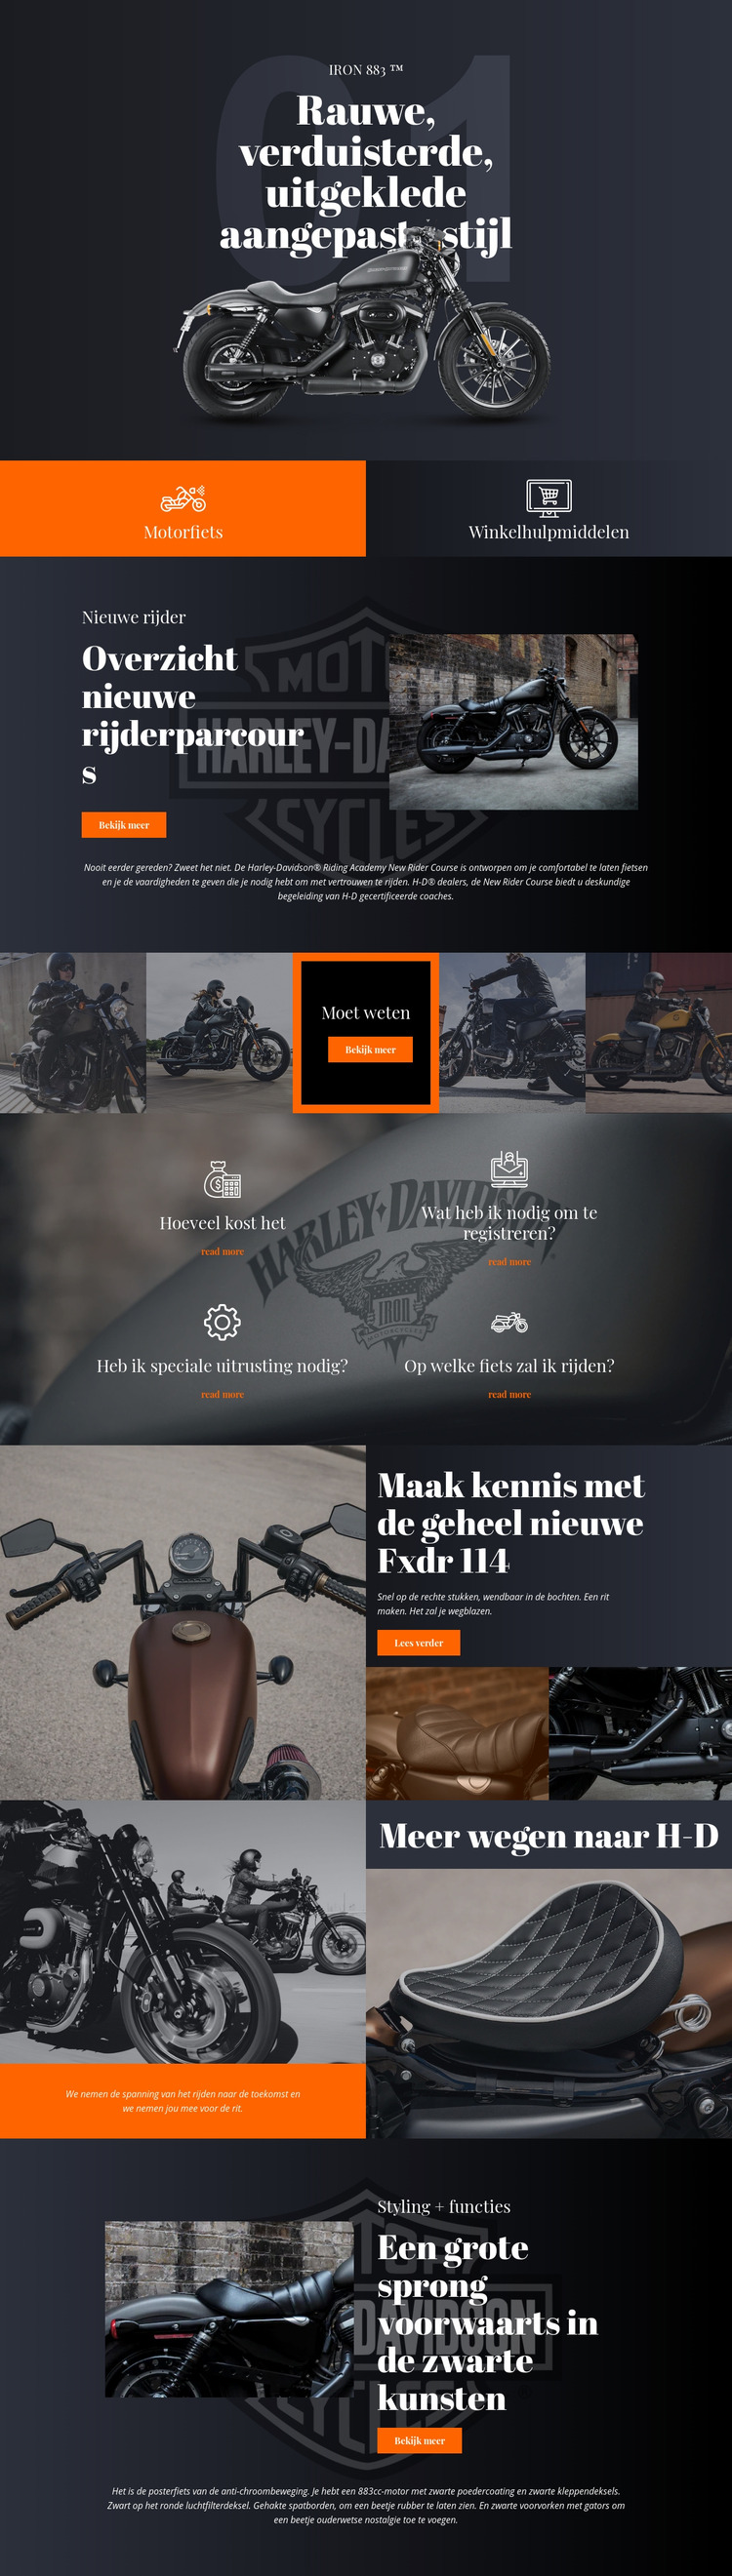 Harley Davidson Joomla-sjabloon